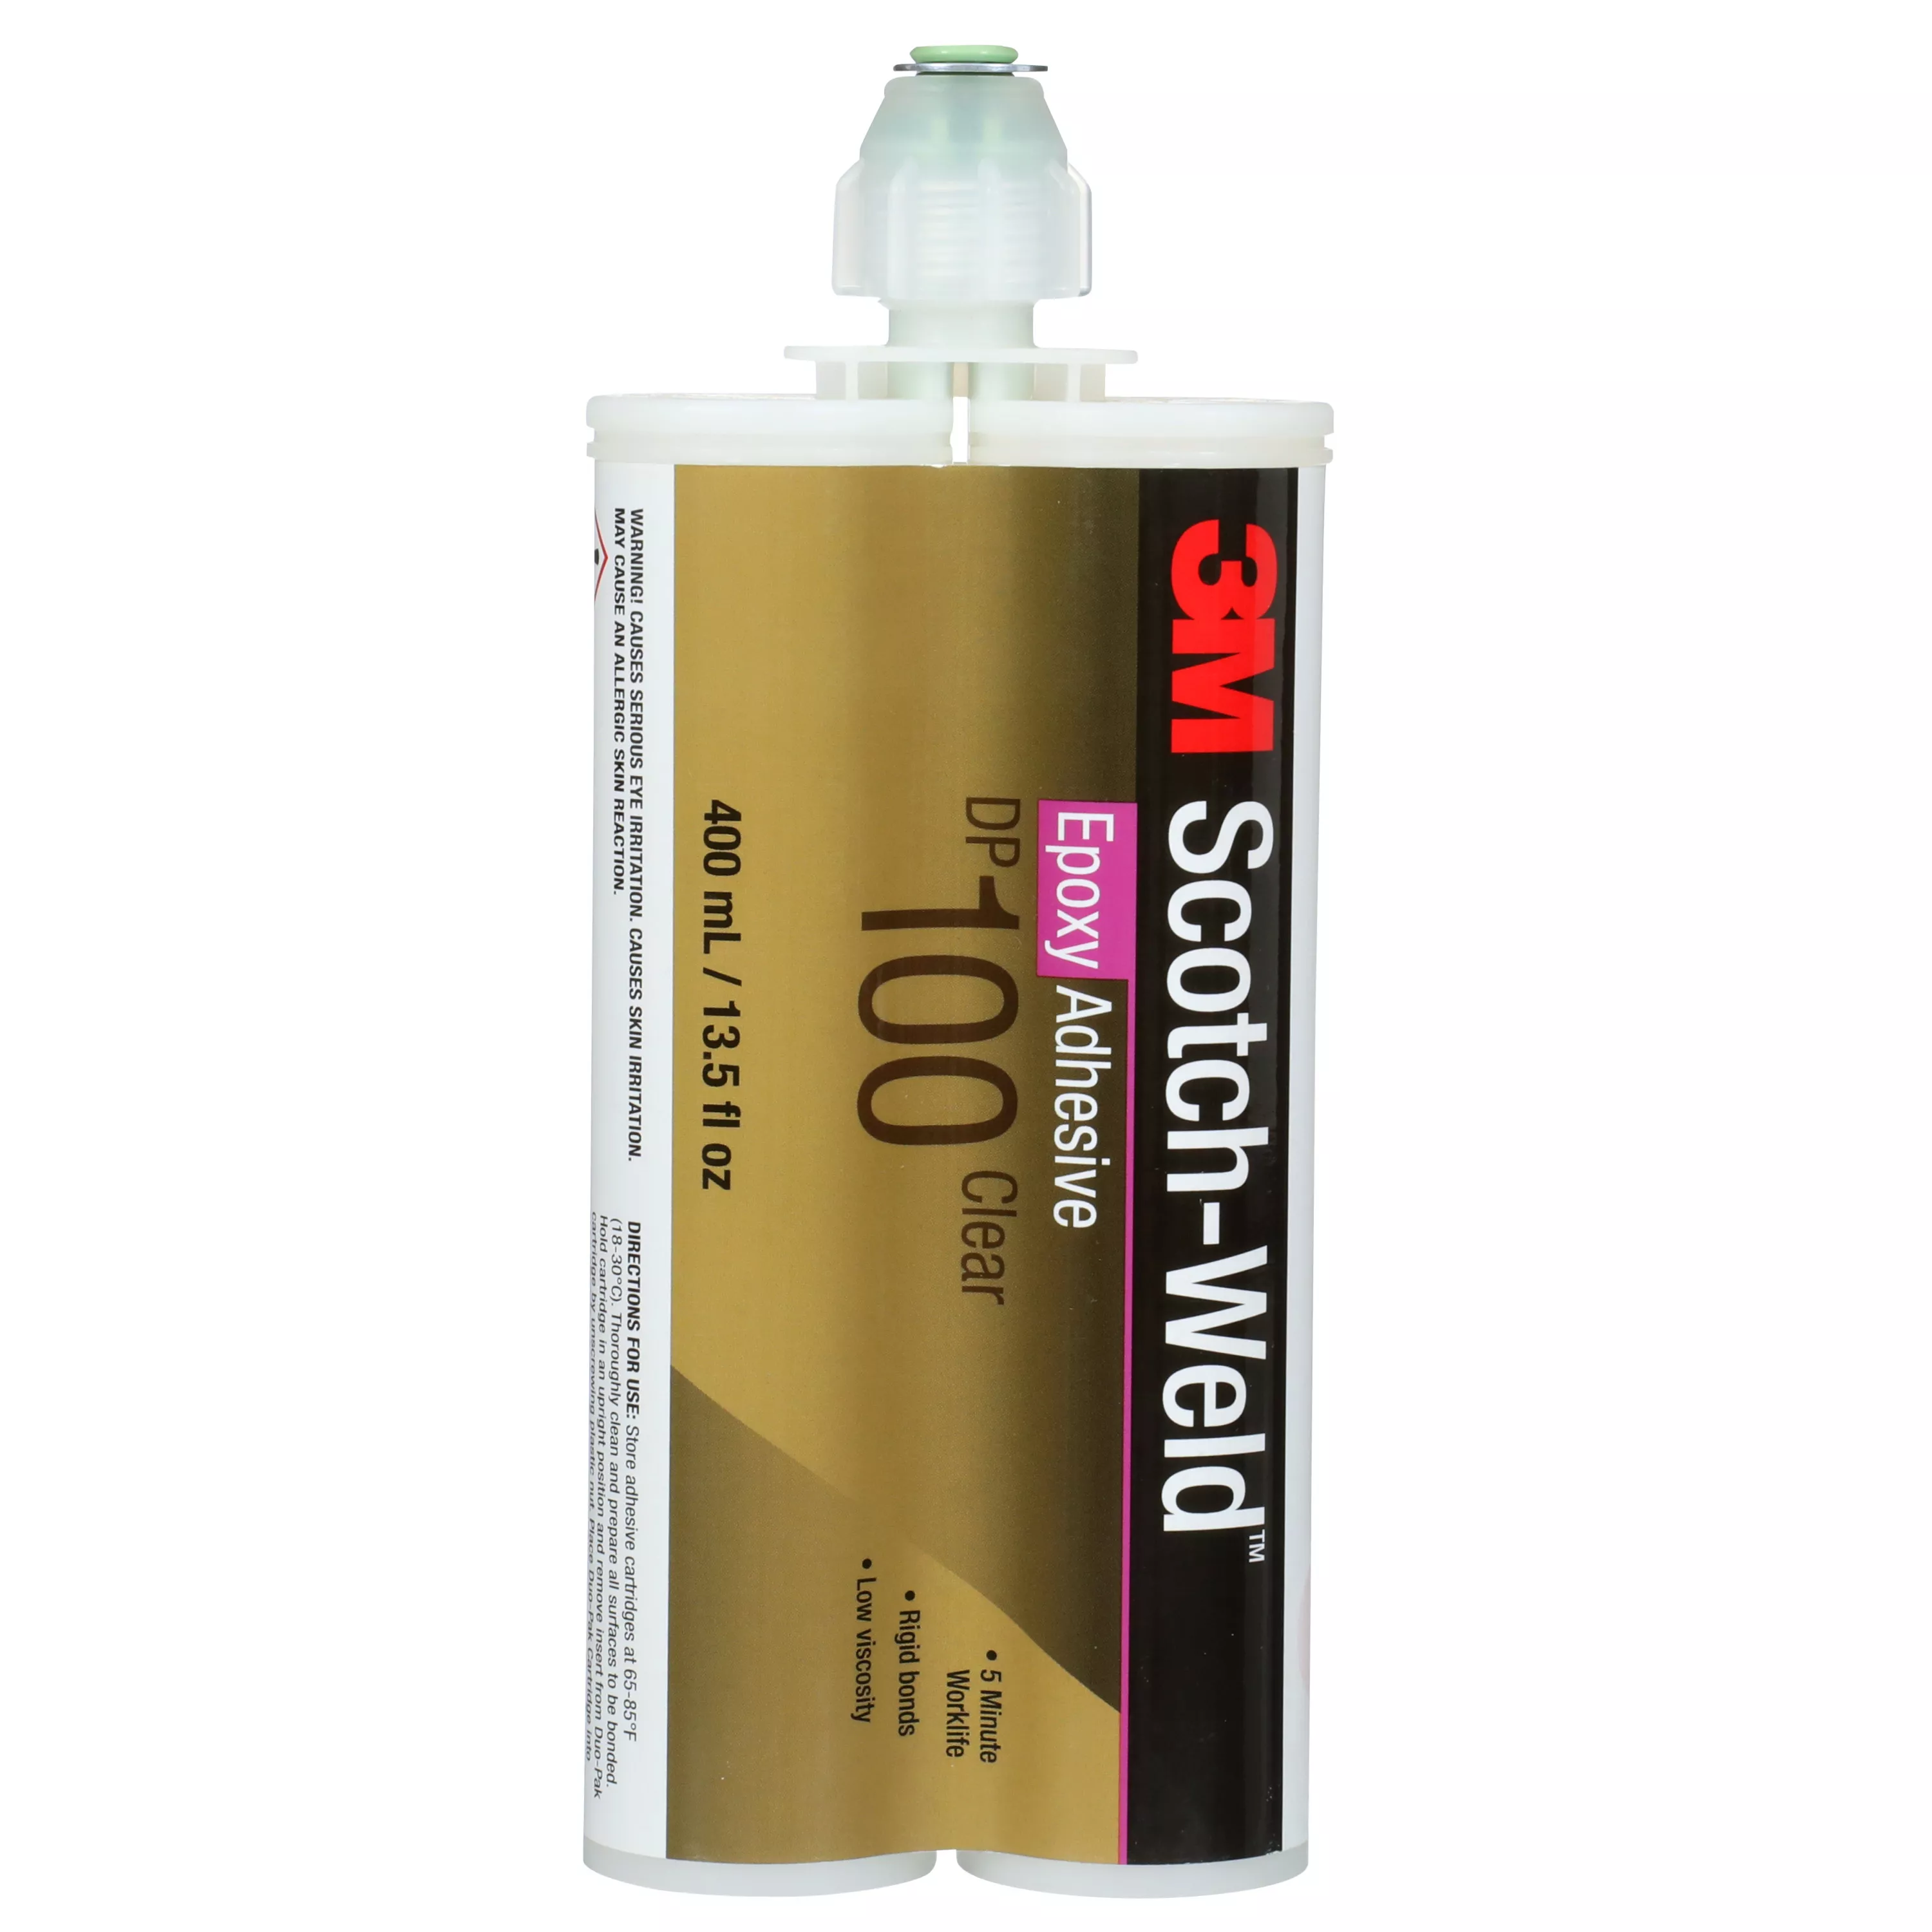 3M™ Scotch-Weld™ Epoxy Adhesive DP100, Clear, 400 mL Duo-Pak, 6
Pack/Case